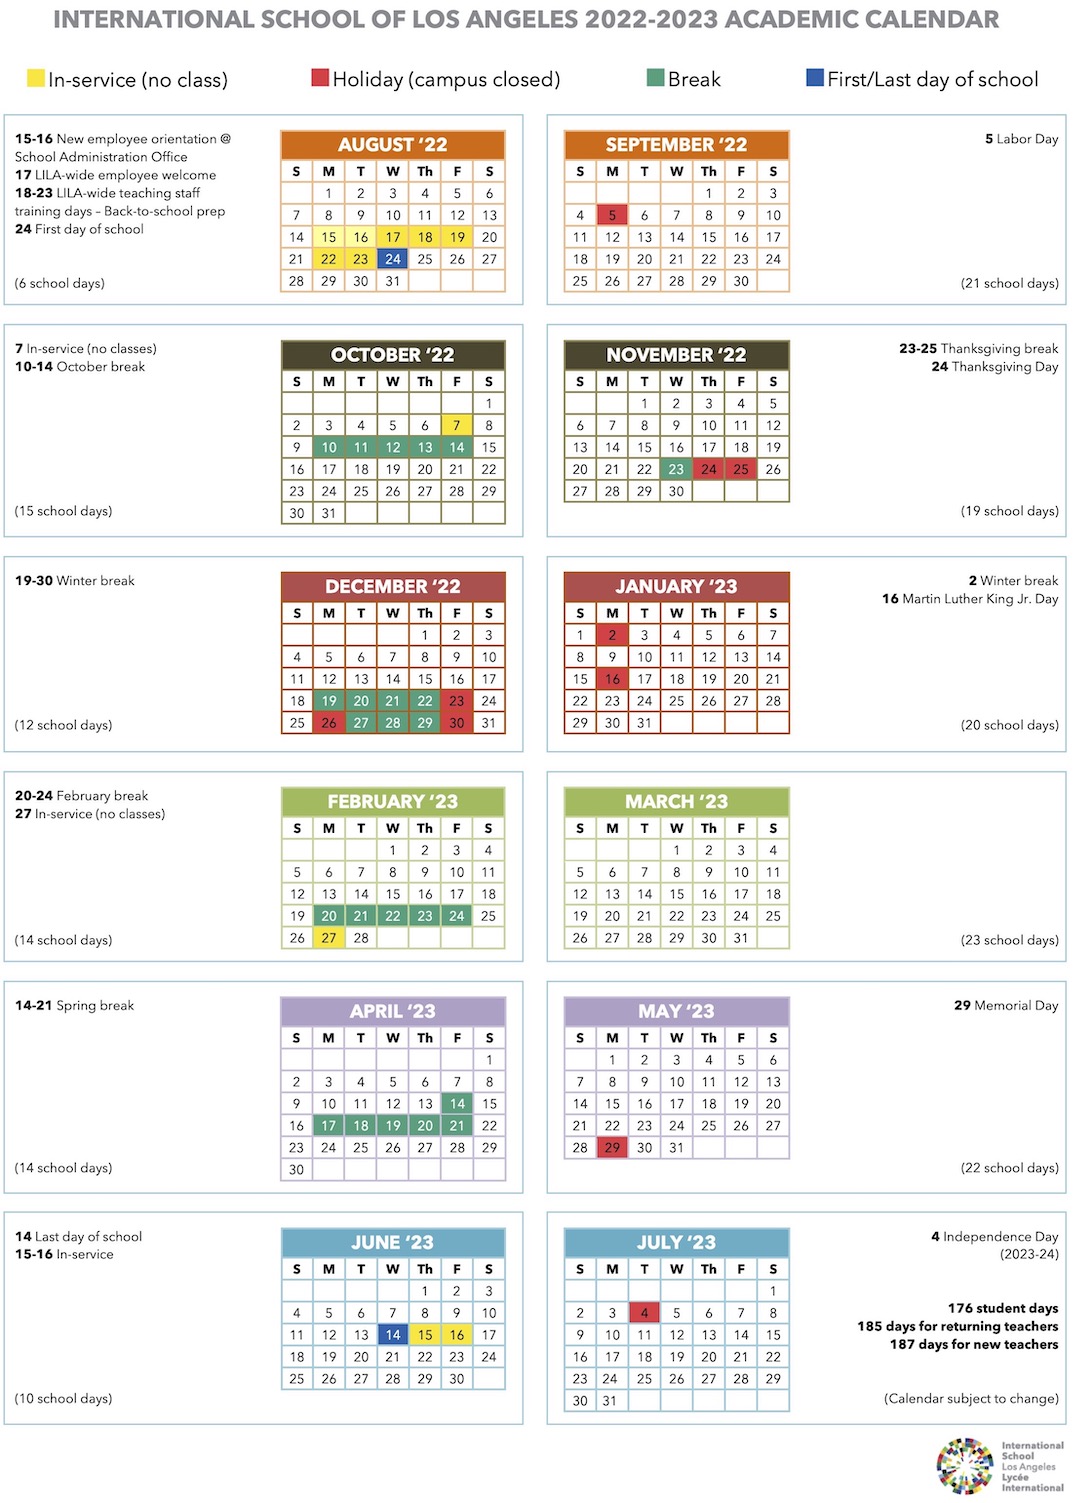 Calendar | International School of Los Angeles